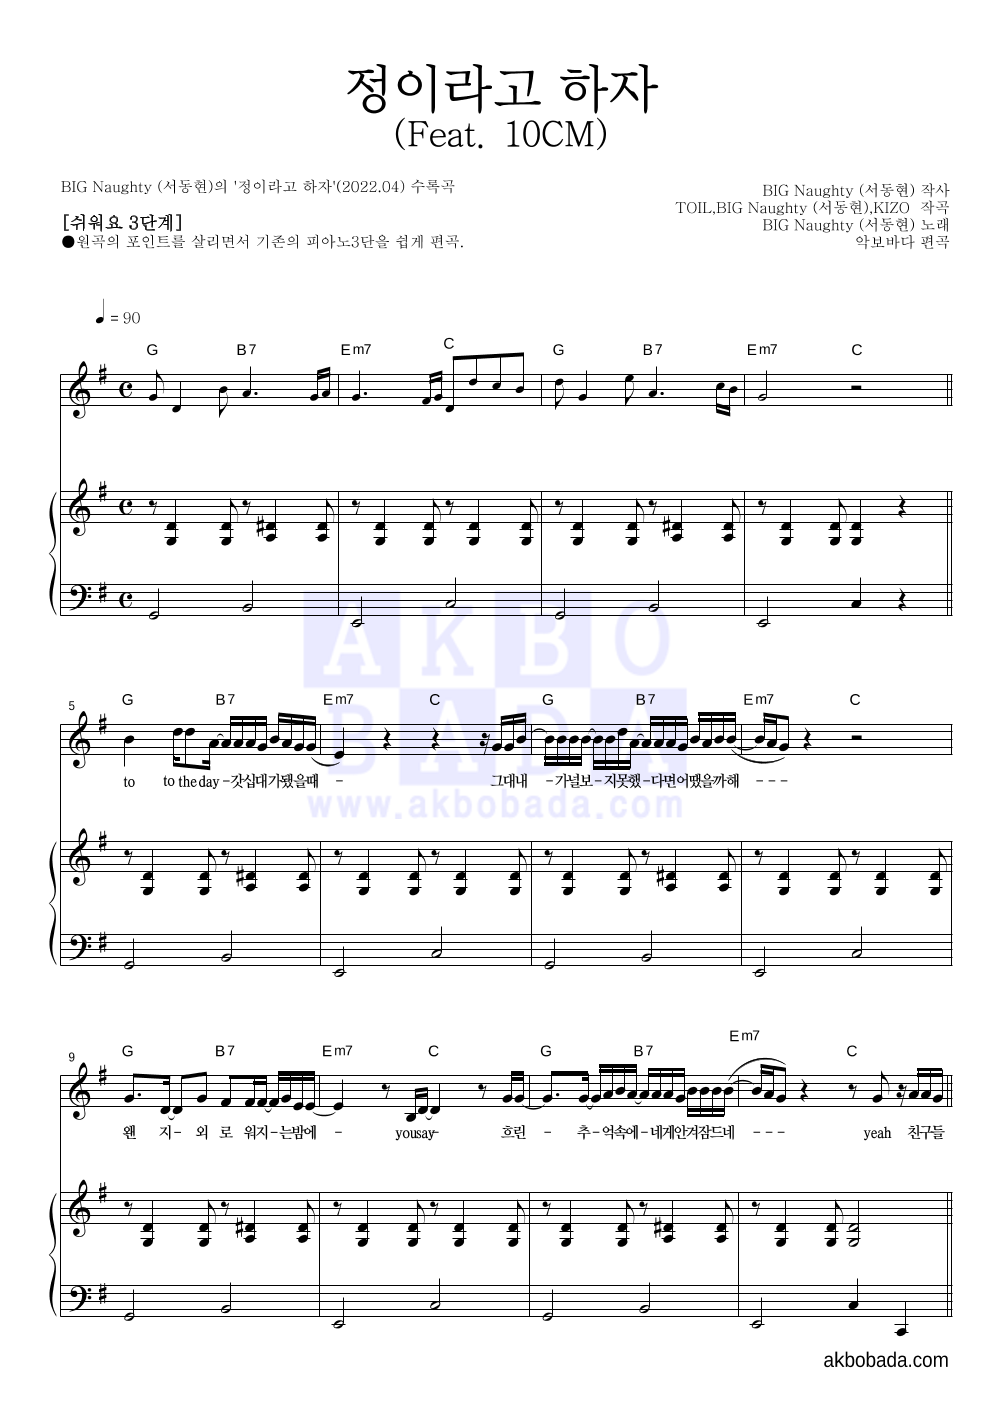 BIG Naughty(서동현) - 정이라고 하자 (Feat. 10CM) 피아노3단-쉬워요 악보 